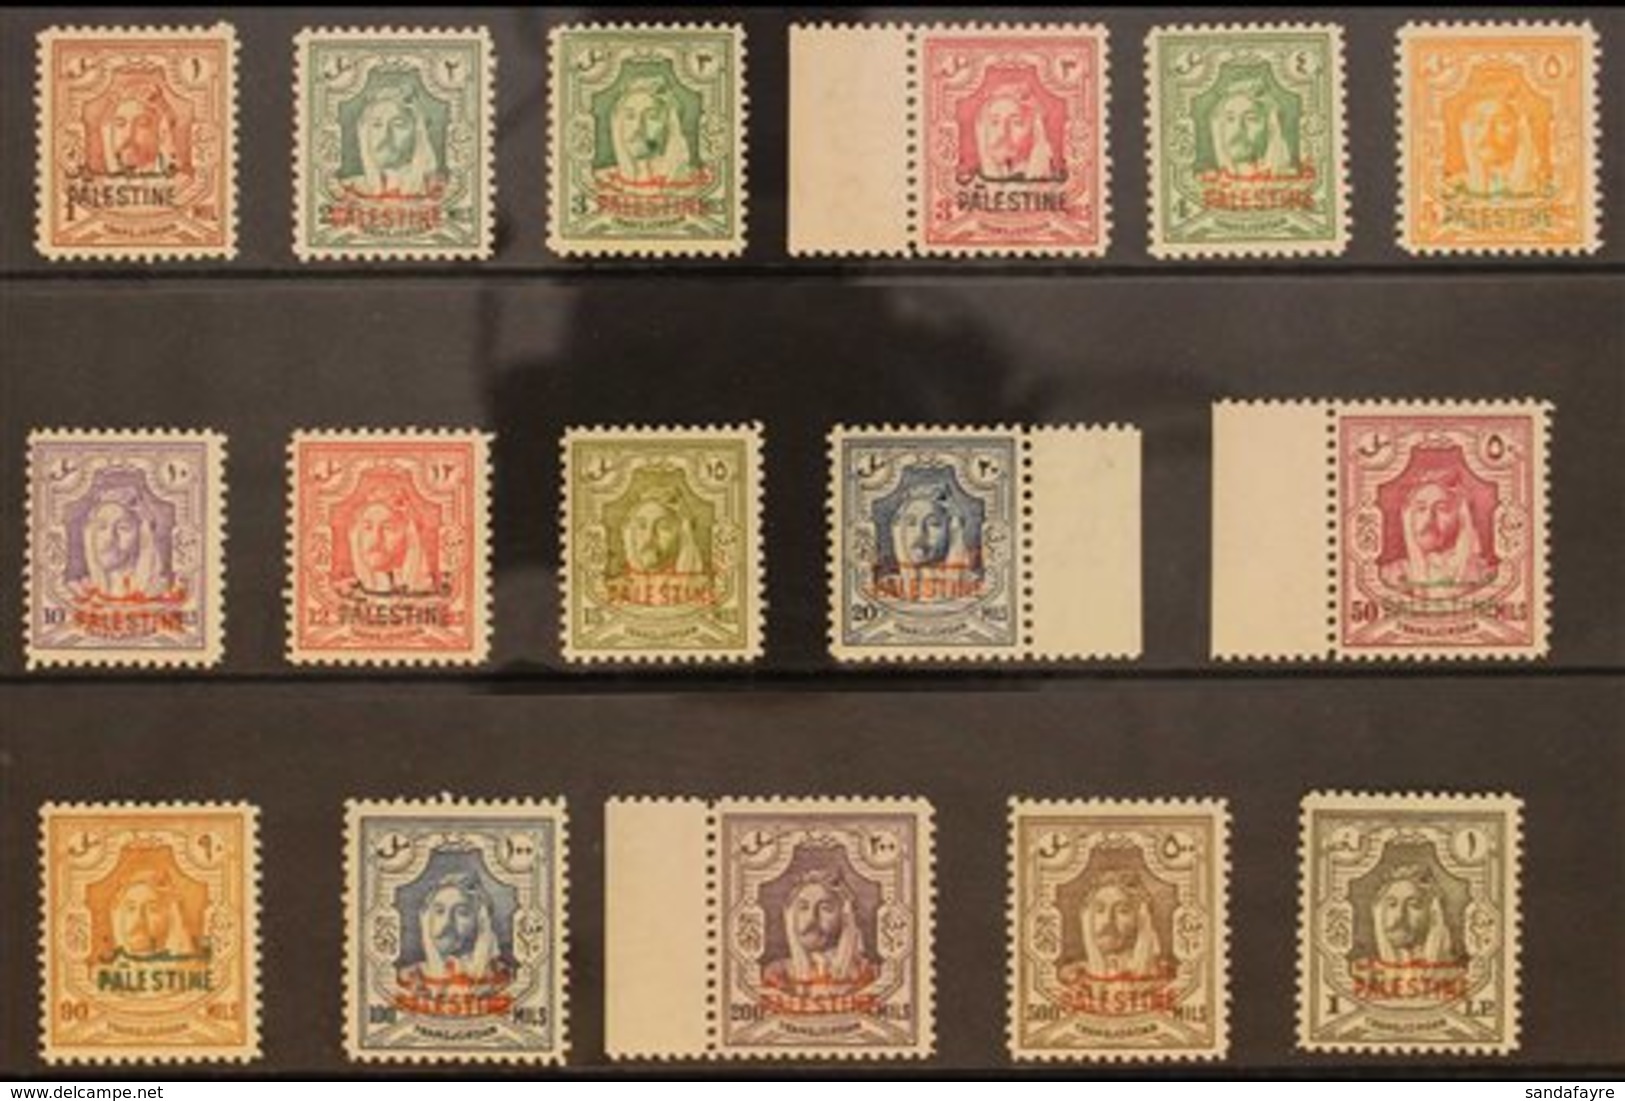 OCCUPATION OF PALESTINE  1948 Jordan Stamps Opt'd "PALESTINE", SG P1/16, Very Fine, Lightly Hinged Mint (16 Stamps) For  - Jordanien